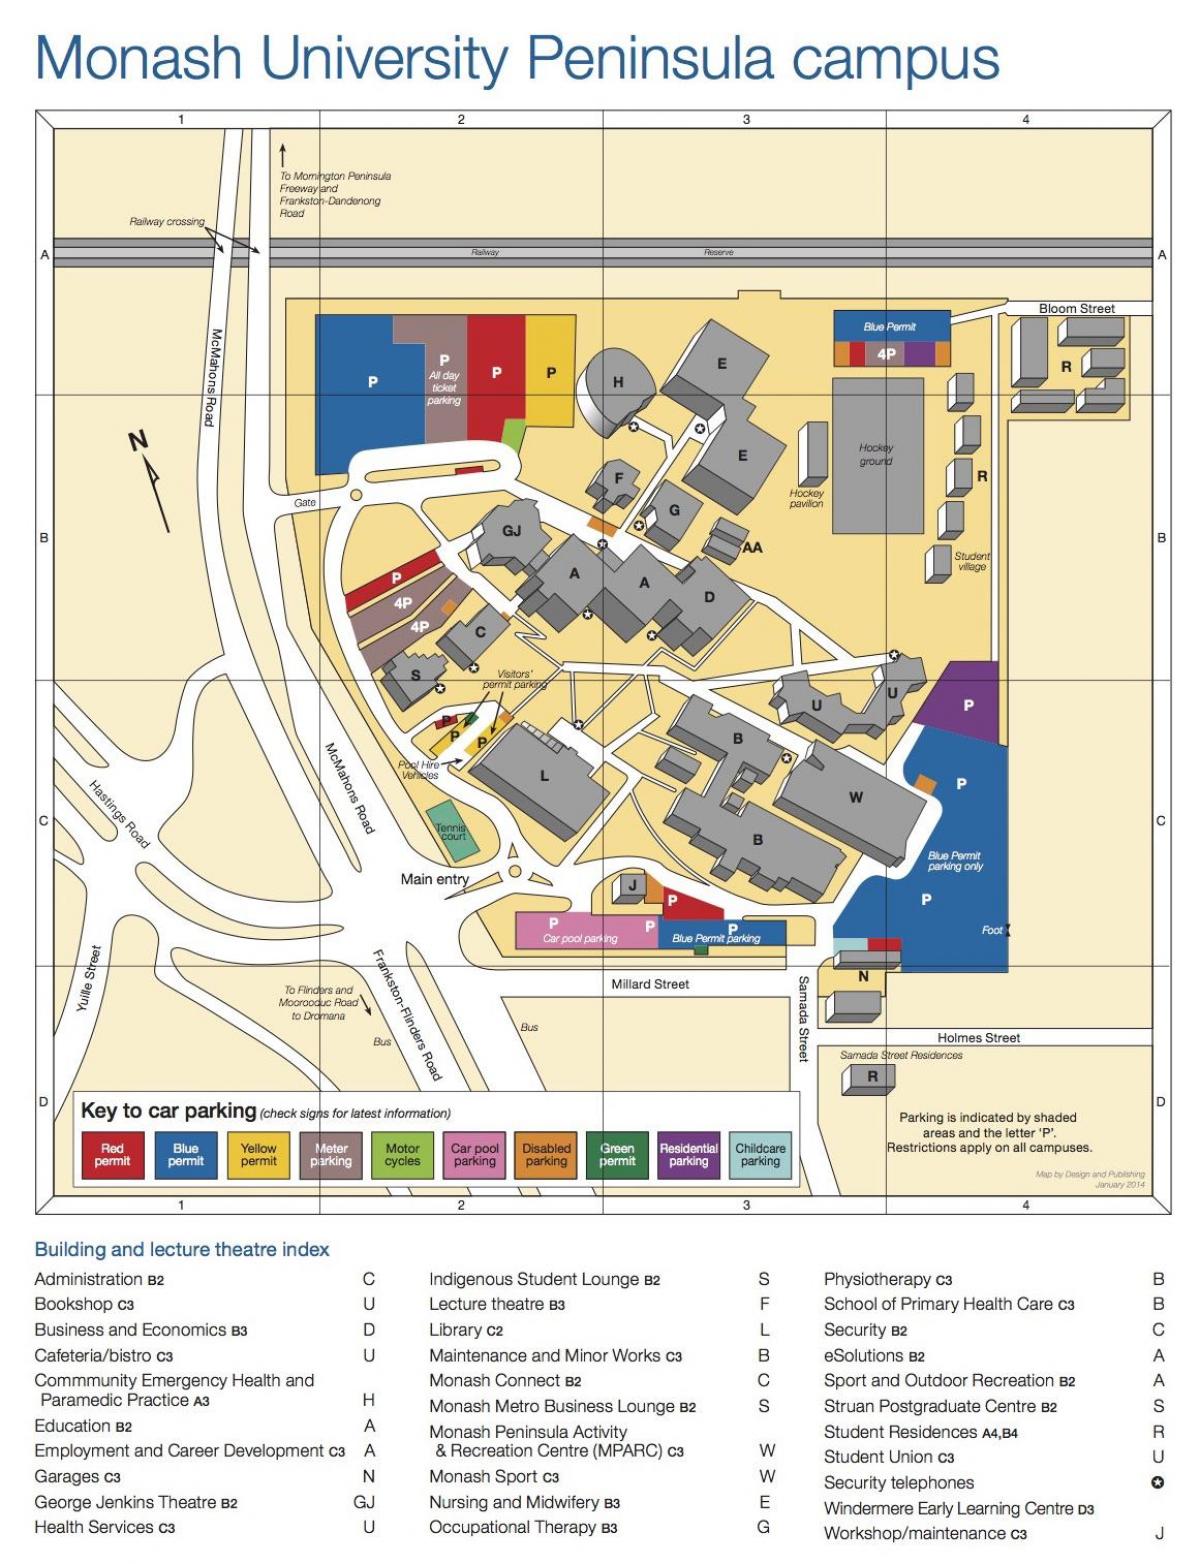 Монаш мапу кампуса универзитета